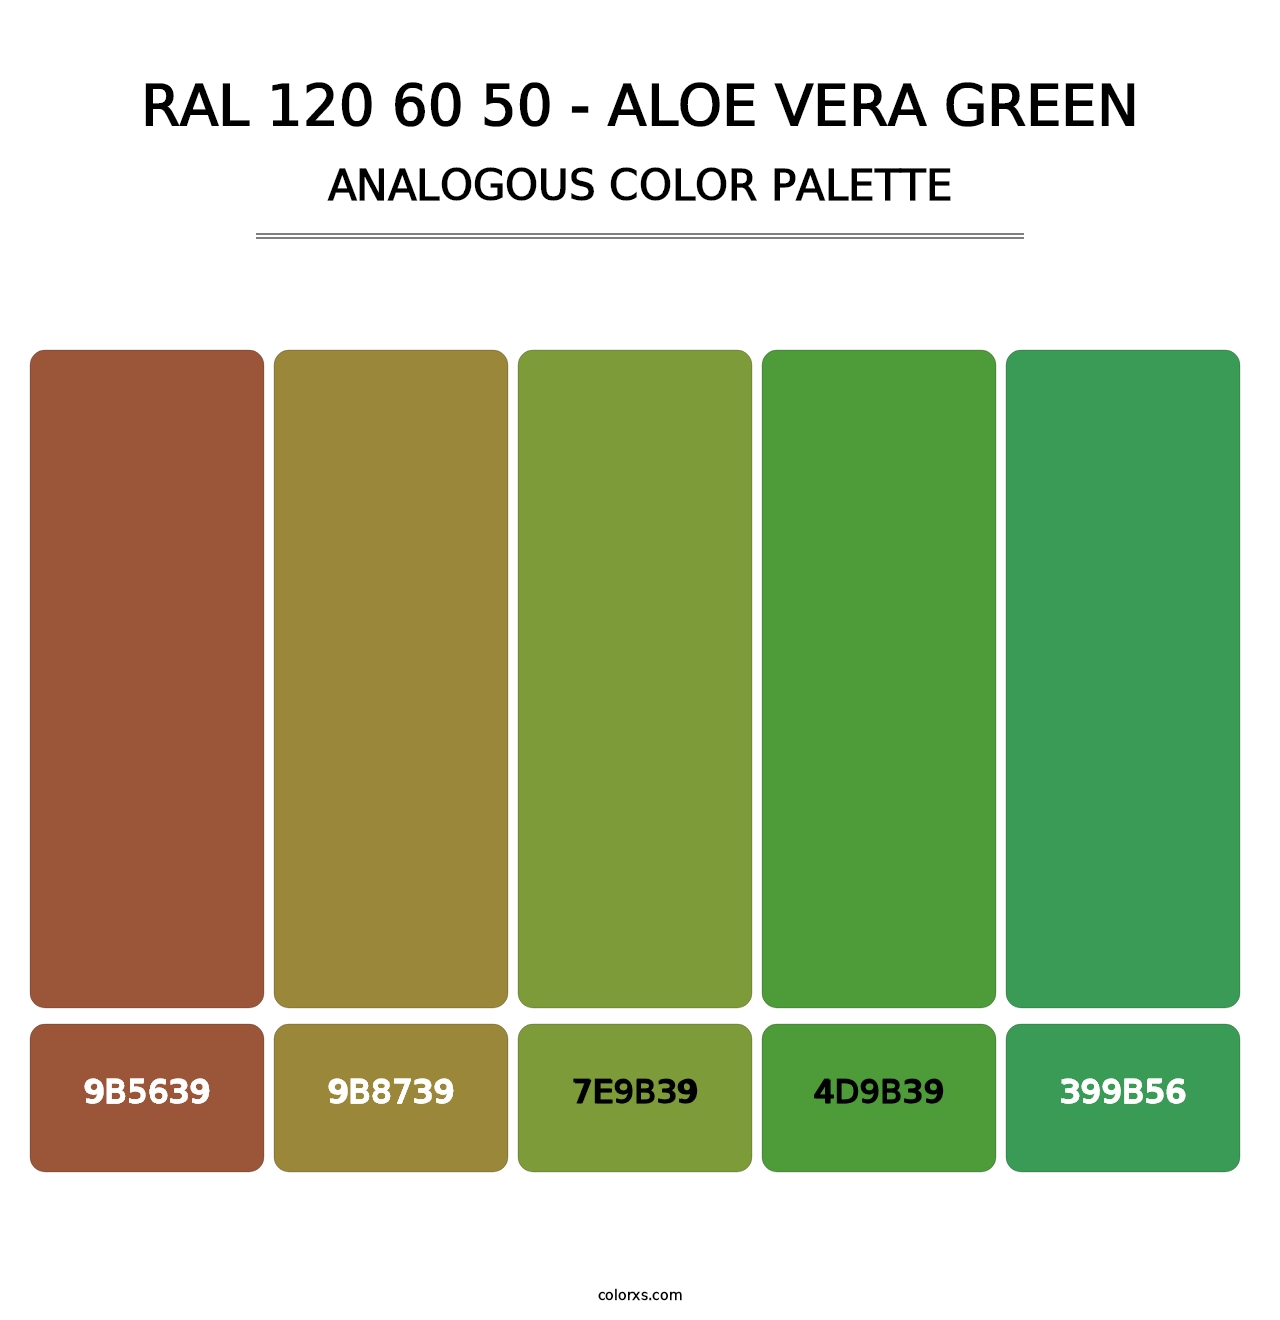 RAL 120 60 50 - Aloe Vera Green - Analogous Color Palette